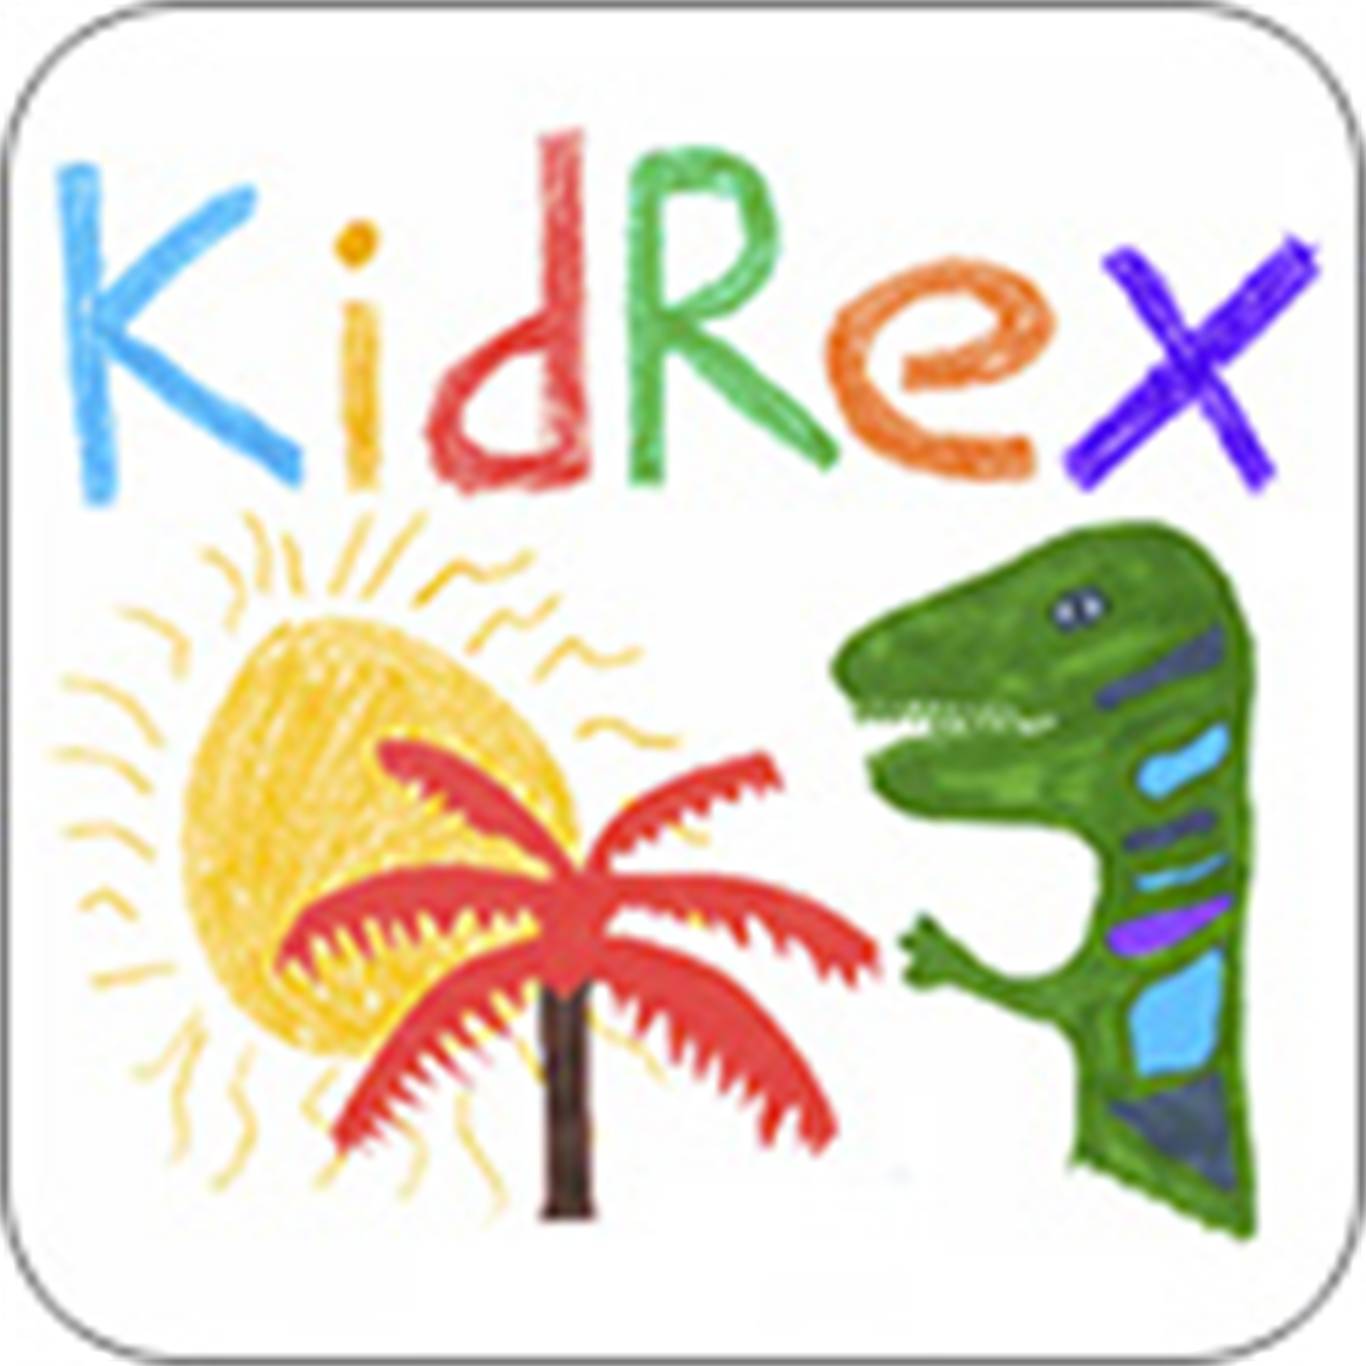 Kidrex Roblox